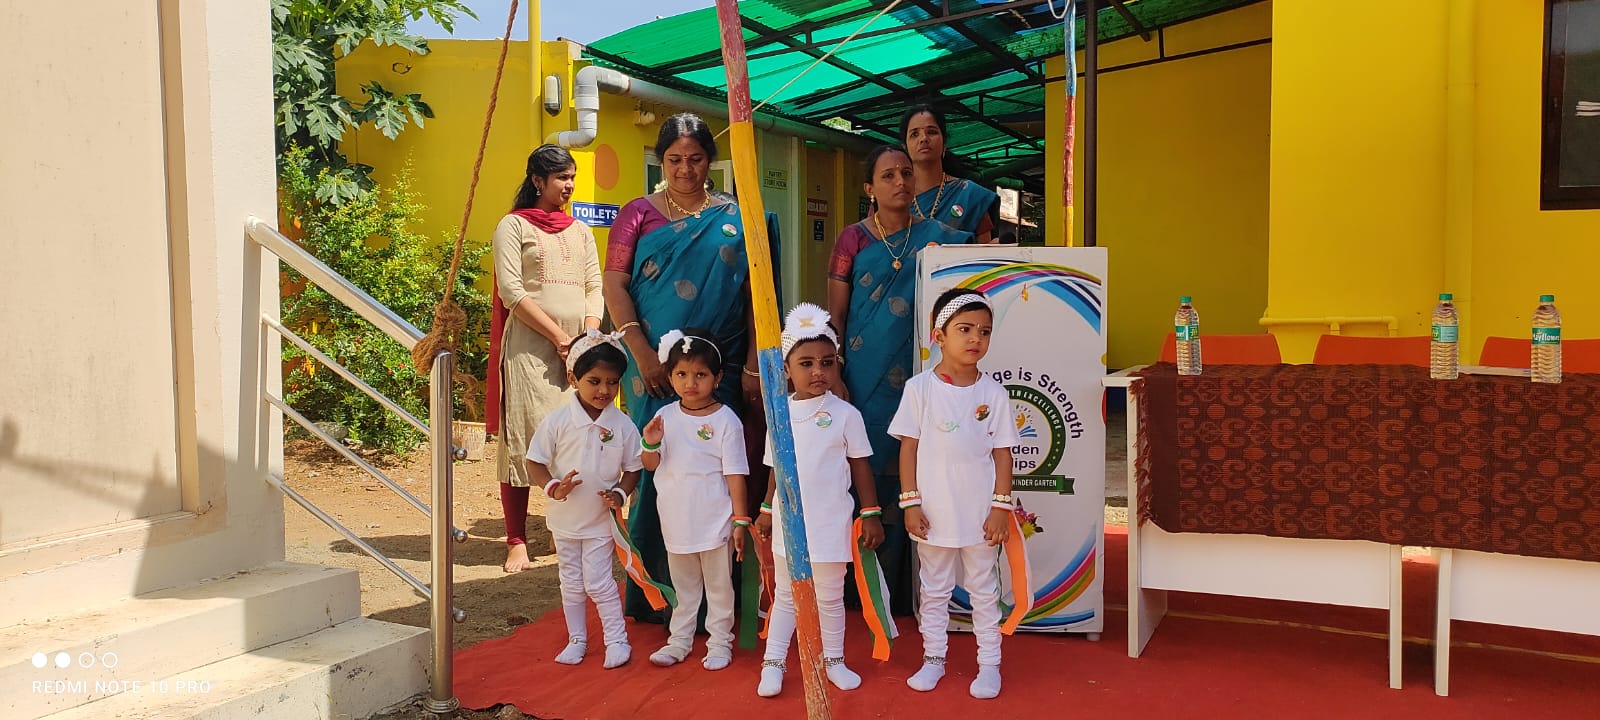 play school in vadavalli Coimbatore, kindergarten in vadavalli play school vadavalli, kindergarten in vadavalli Coimbatore, golden tulip school